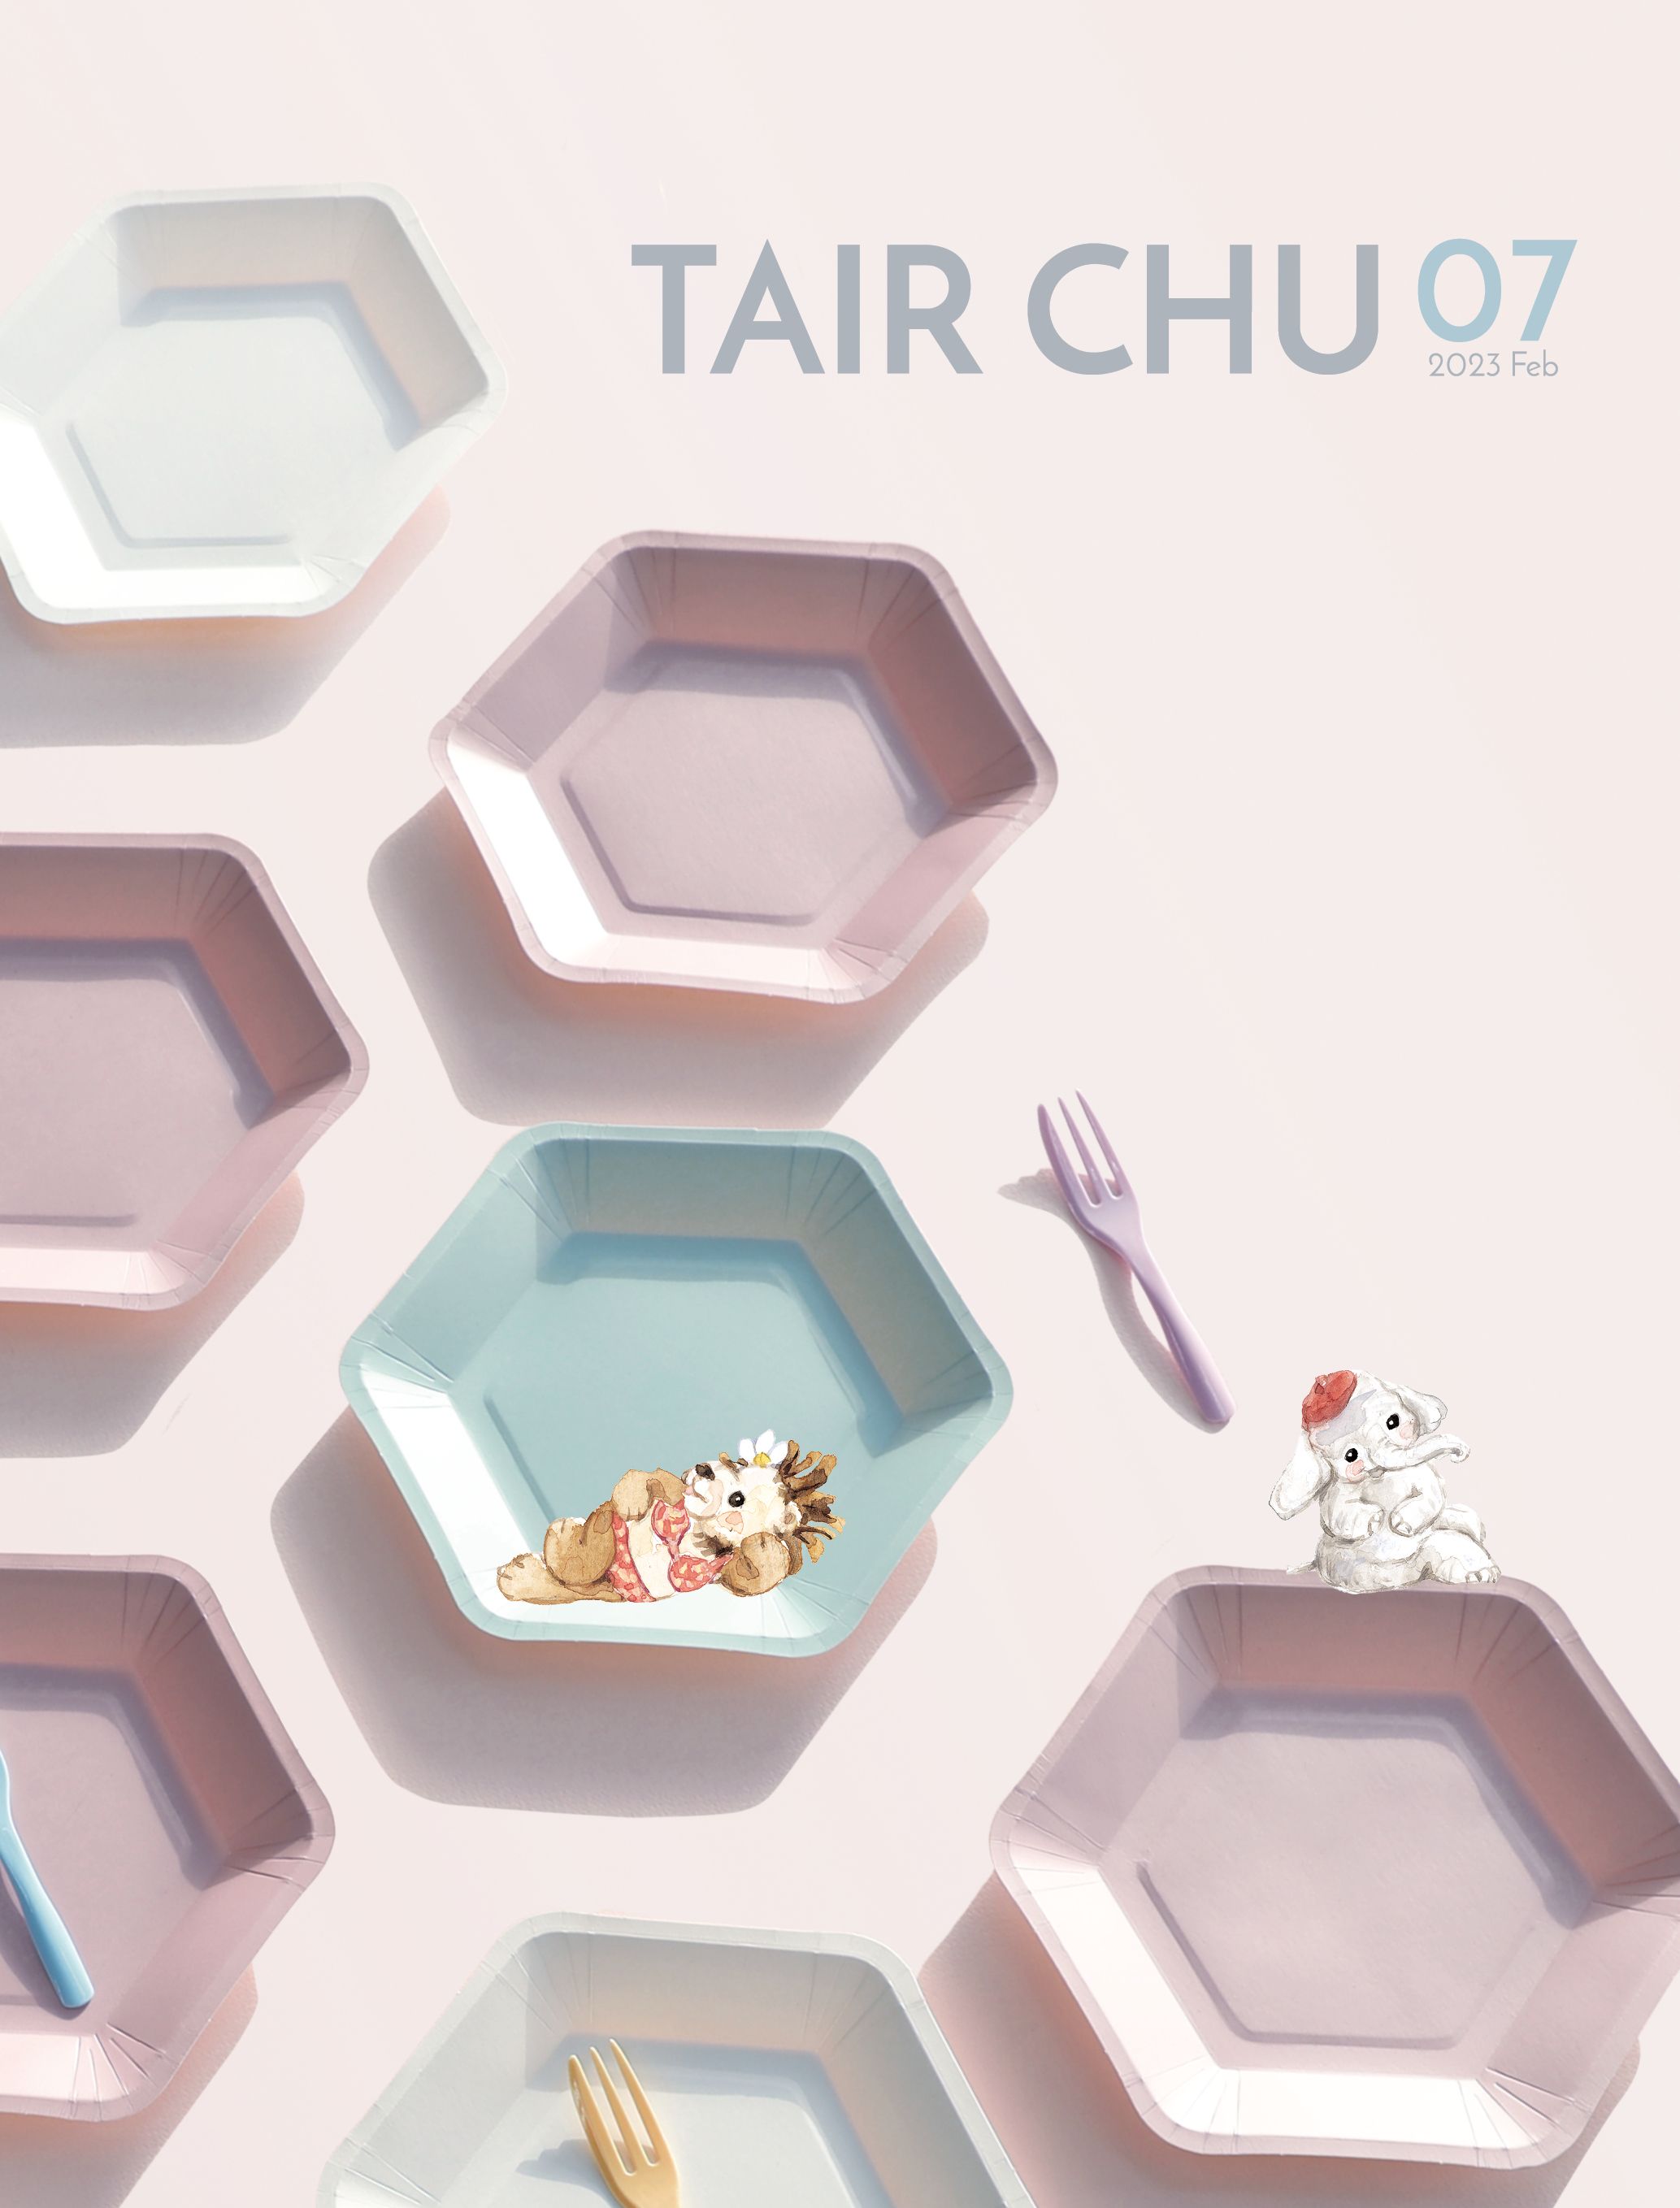 Katalog Peralatan Makan dan Peralatan Meja Biodegradasi Parti 2023 Tair Chu